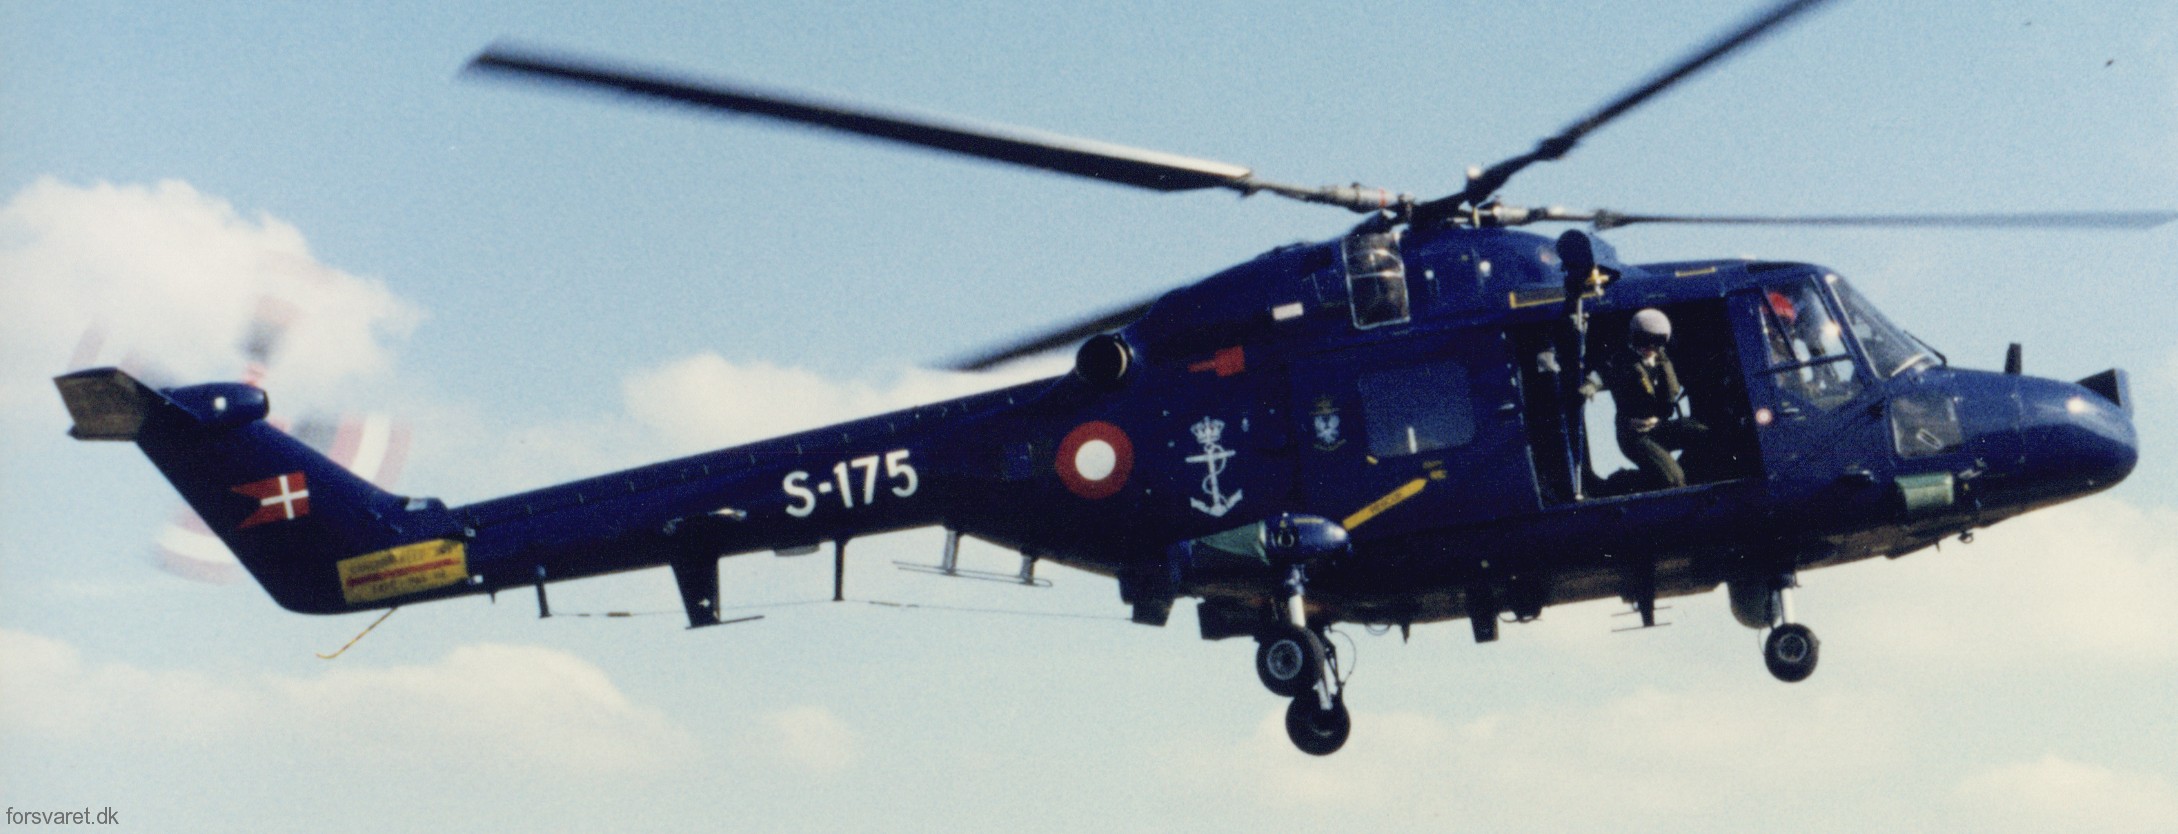 lynx mk.80 mk.90b helicopter westland royal danish navy air force kongelige danske marine flyvevabnet s-175 26